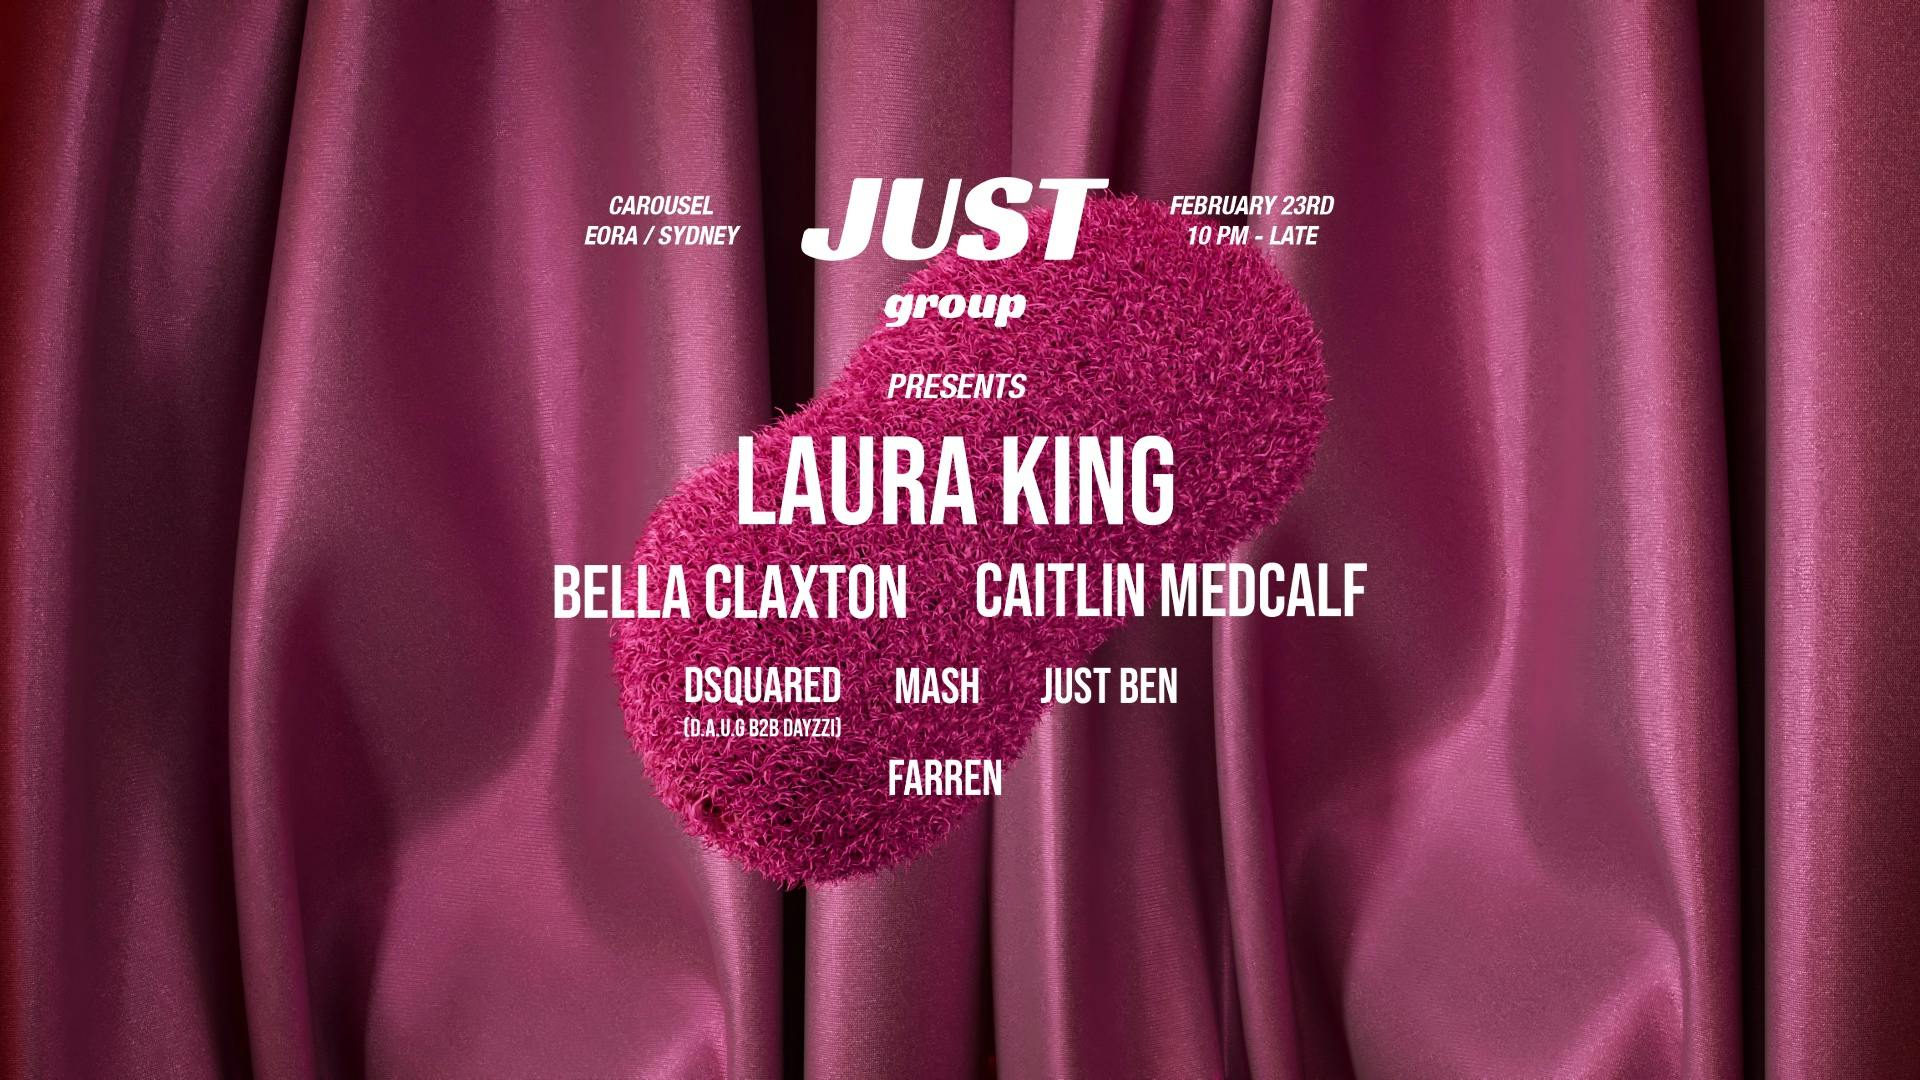 Just Group Presents: JG4 w/ Laura King, Bella Claxton, & Caitlin Medcalf